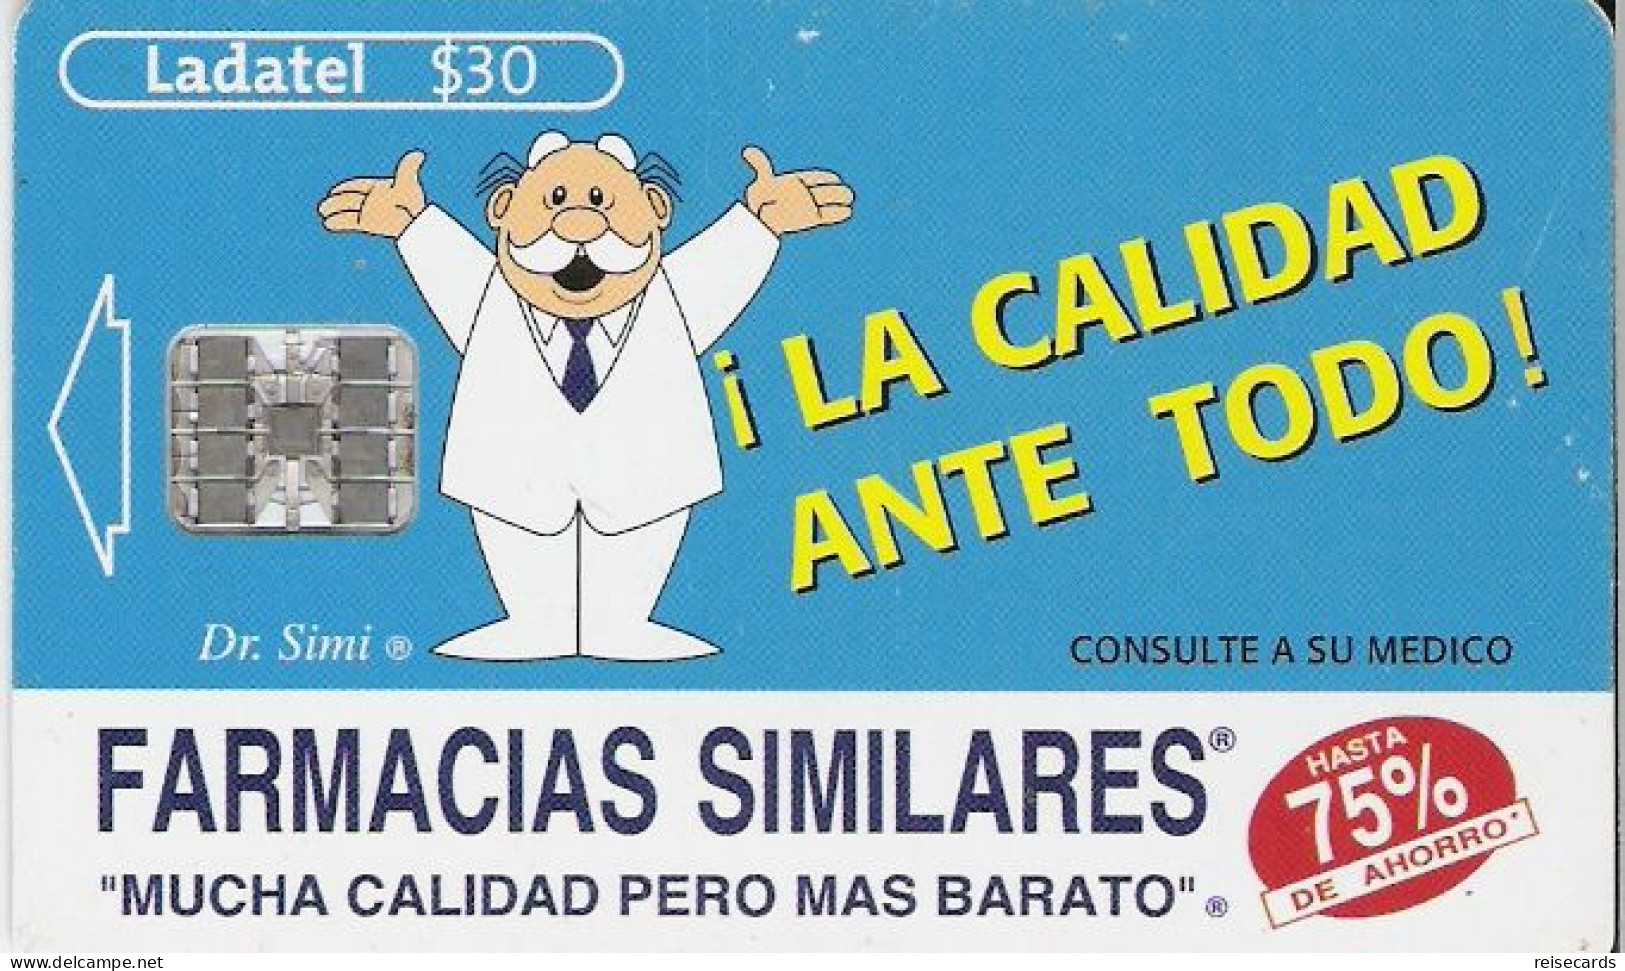 Mexico: Telmex/lLadatel - 2001 Pharmacias Similares. Calendar - Mexique